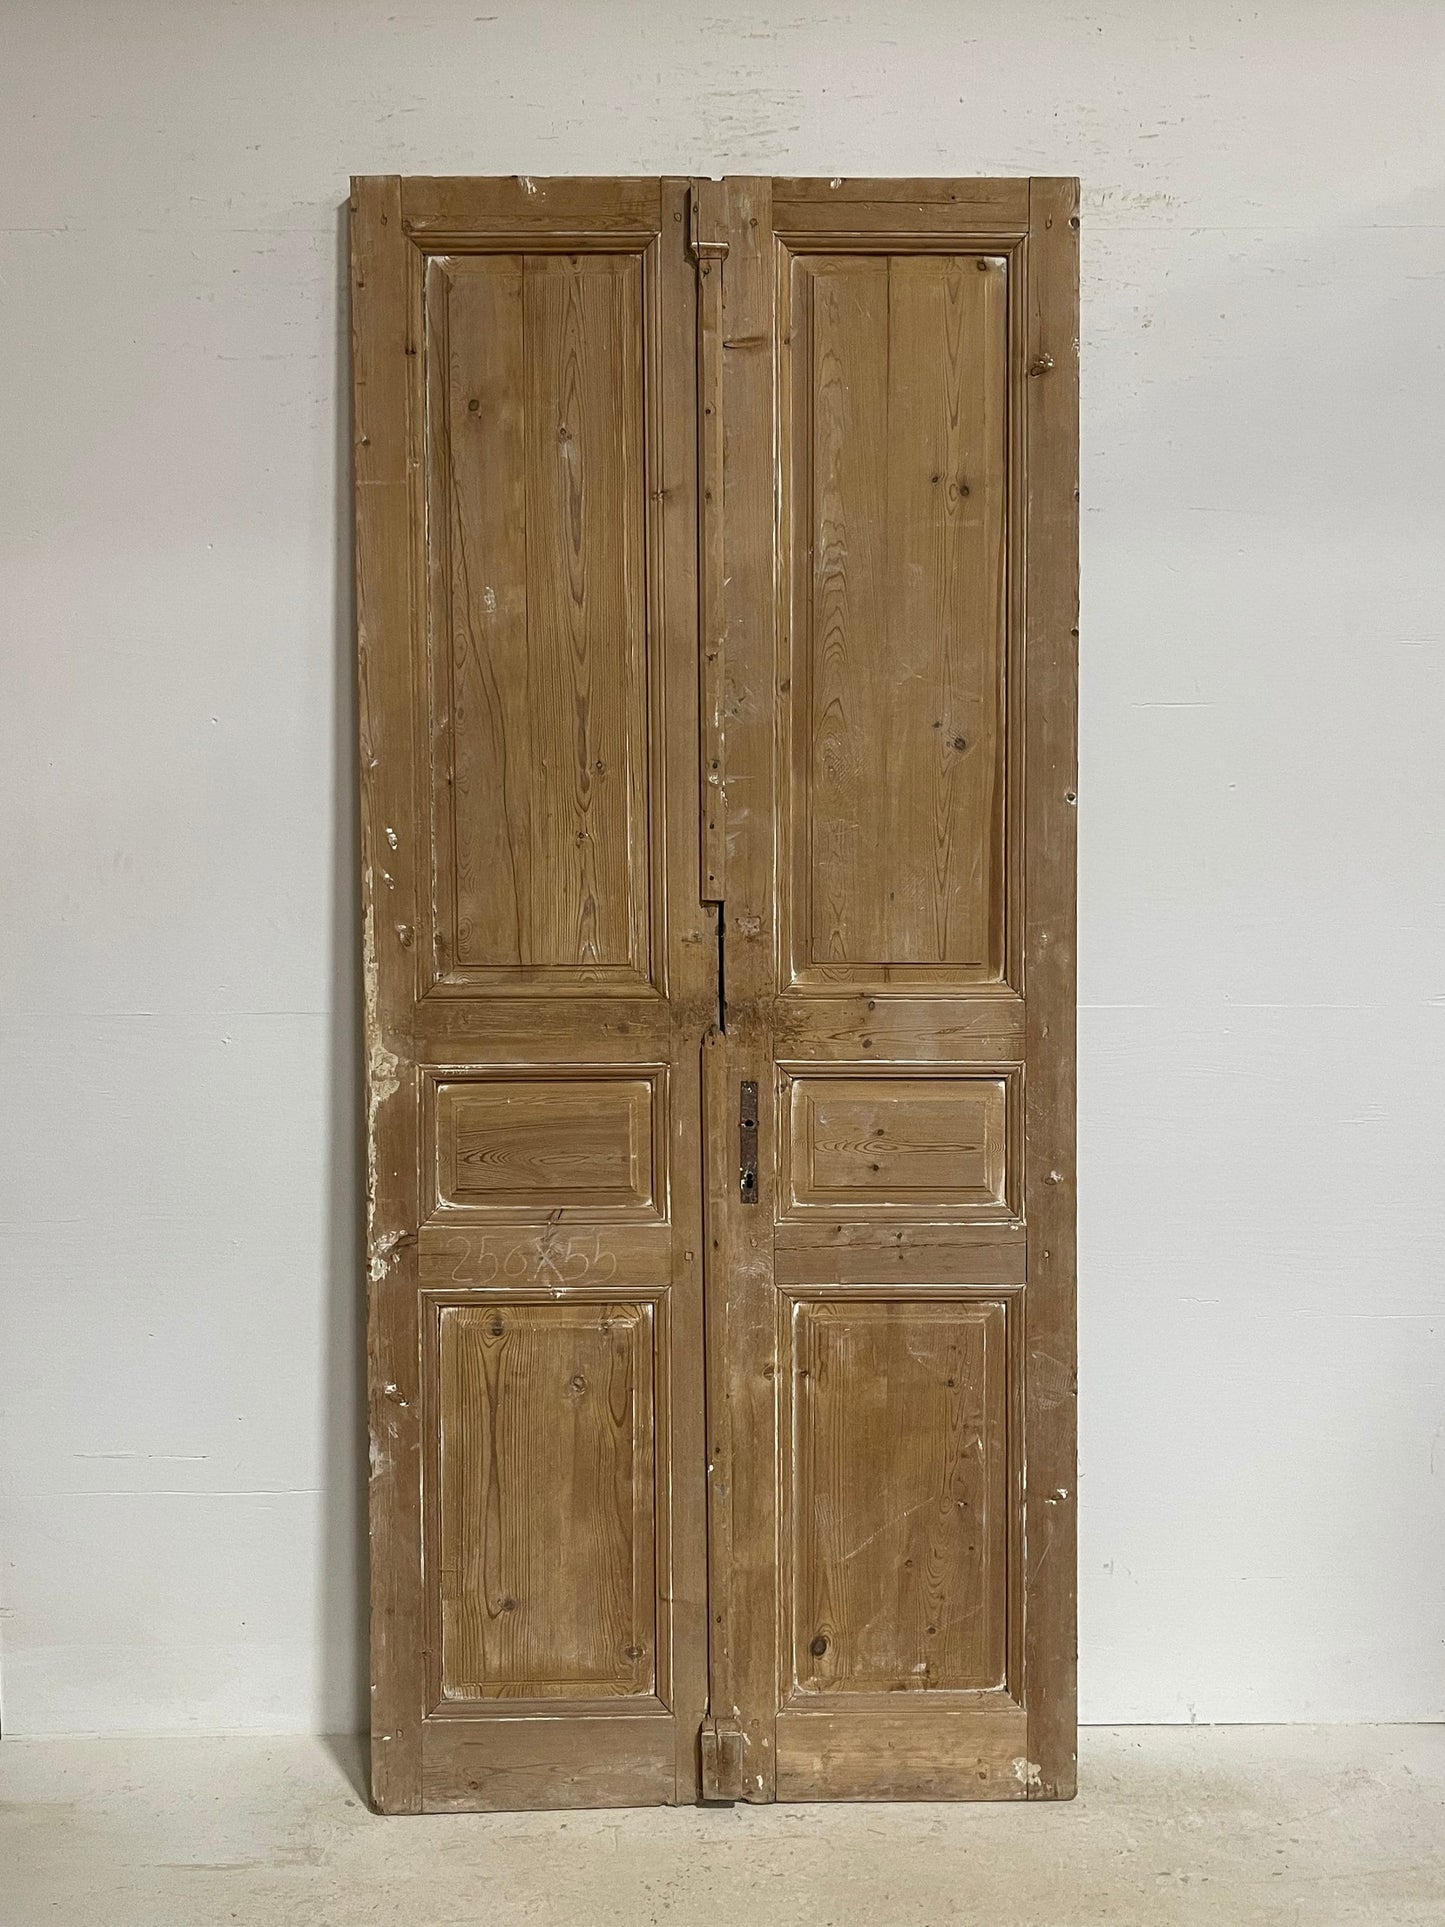 Antique French panel doors (98.5x43.25) G0150s